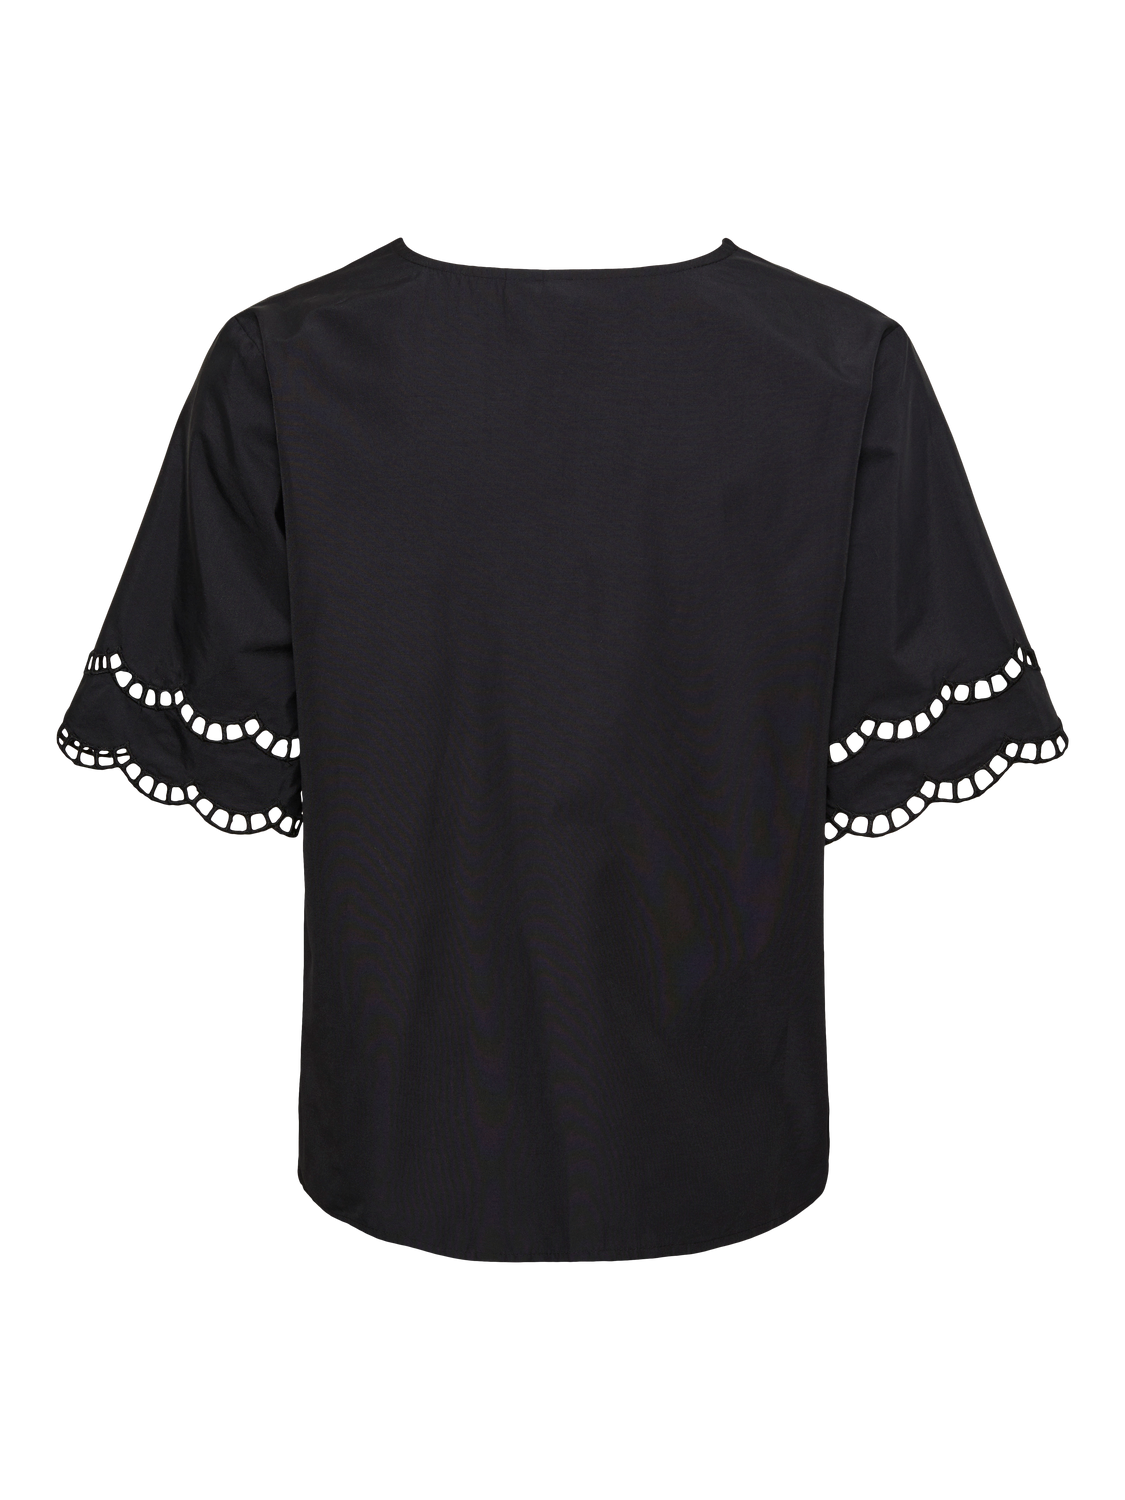 PCSARA T-Shirts & Tops - Black